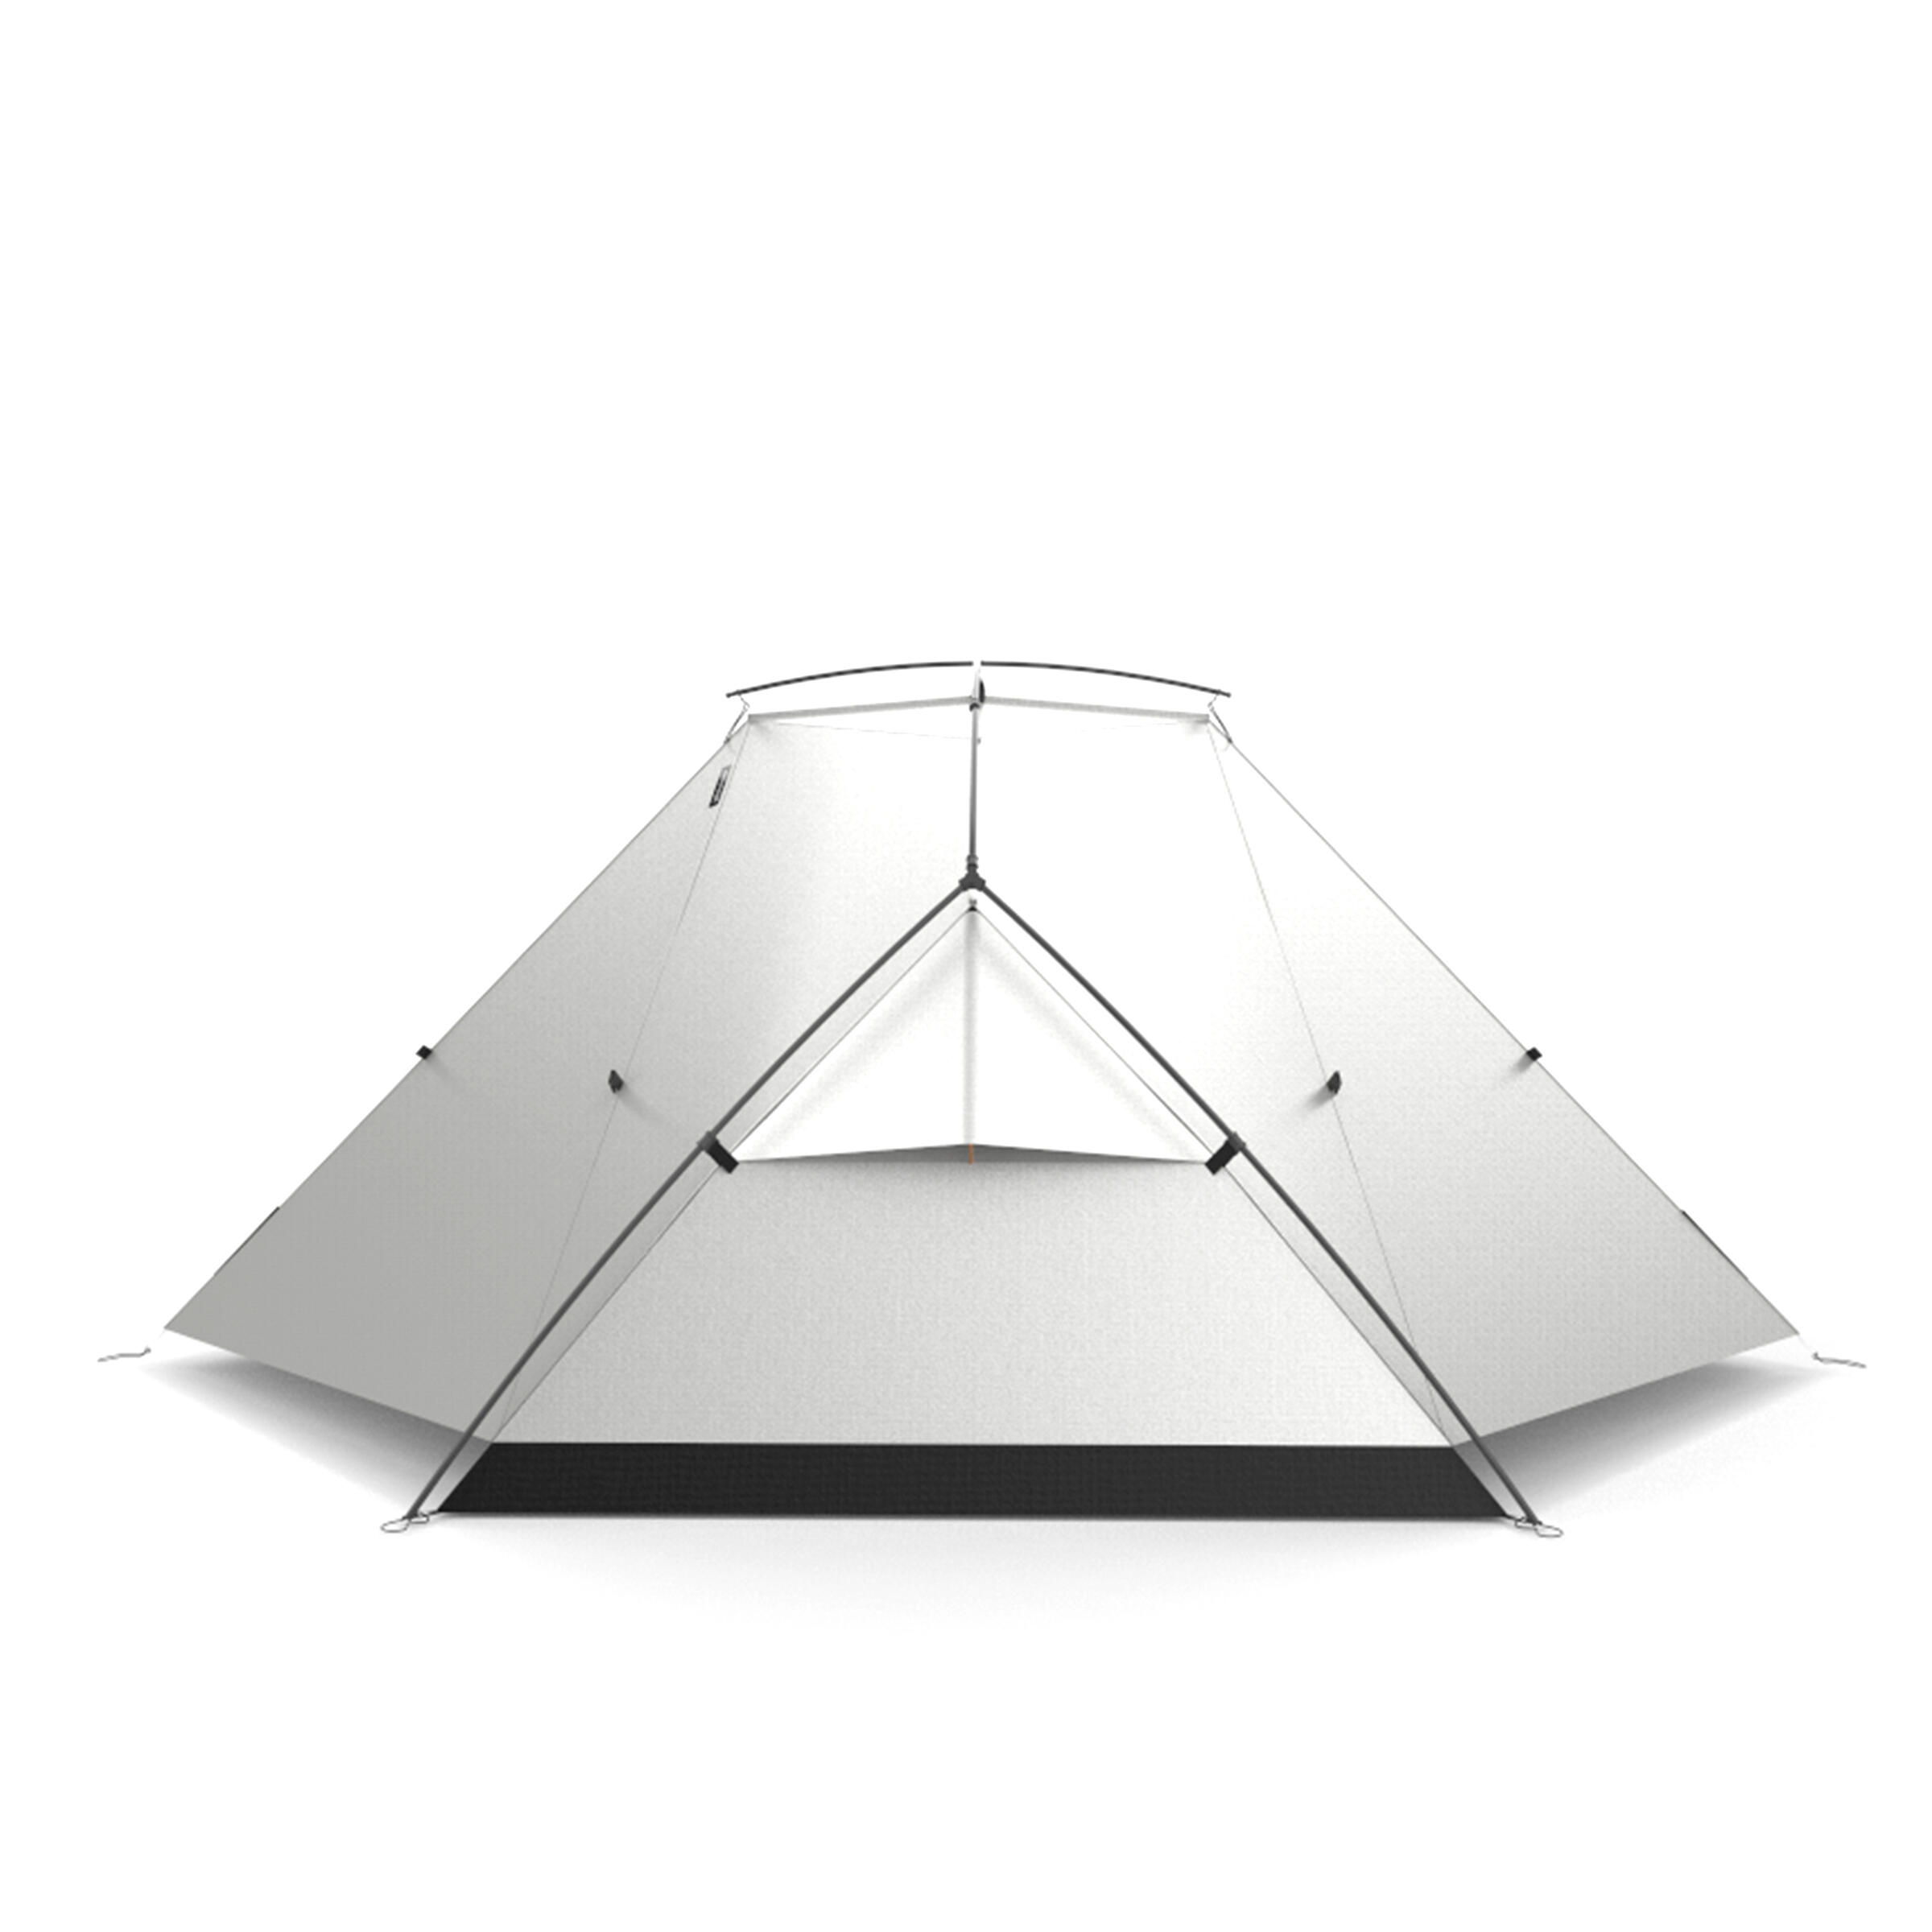 FORCLAZ Single-wall trekking tent - 2 person - MT900 Ultra light